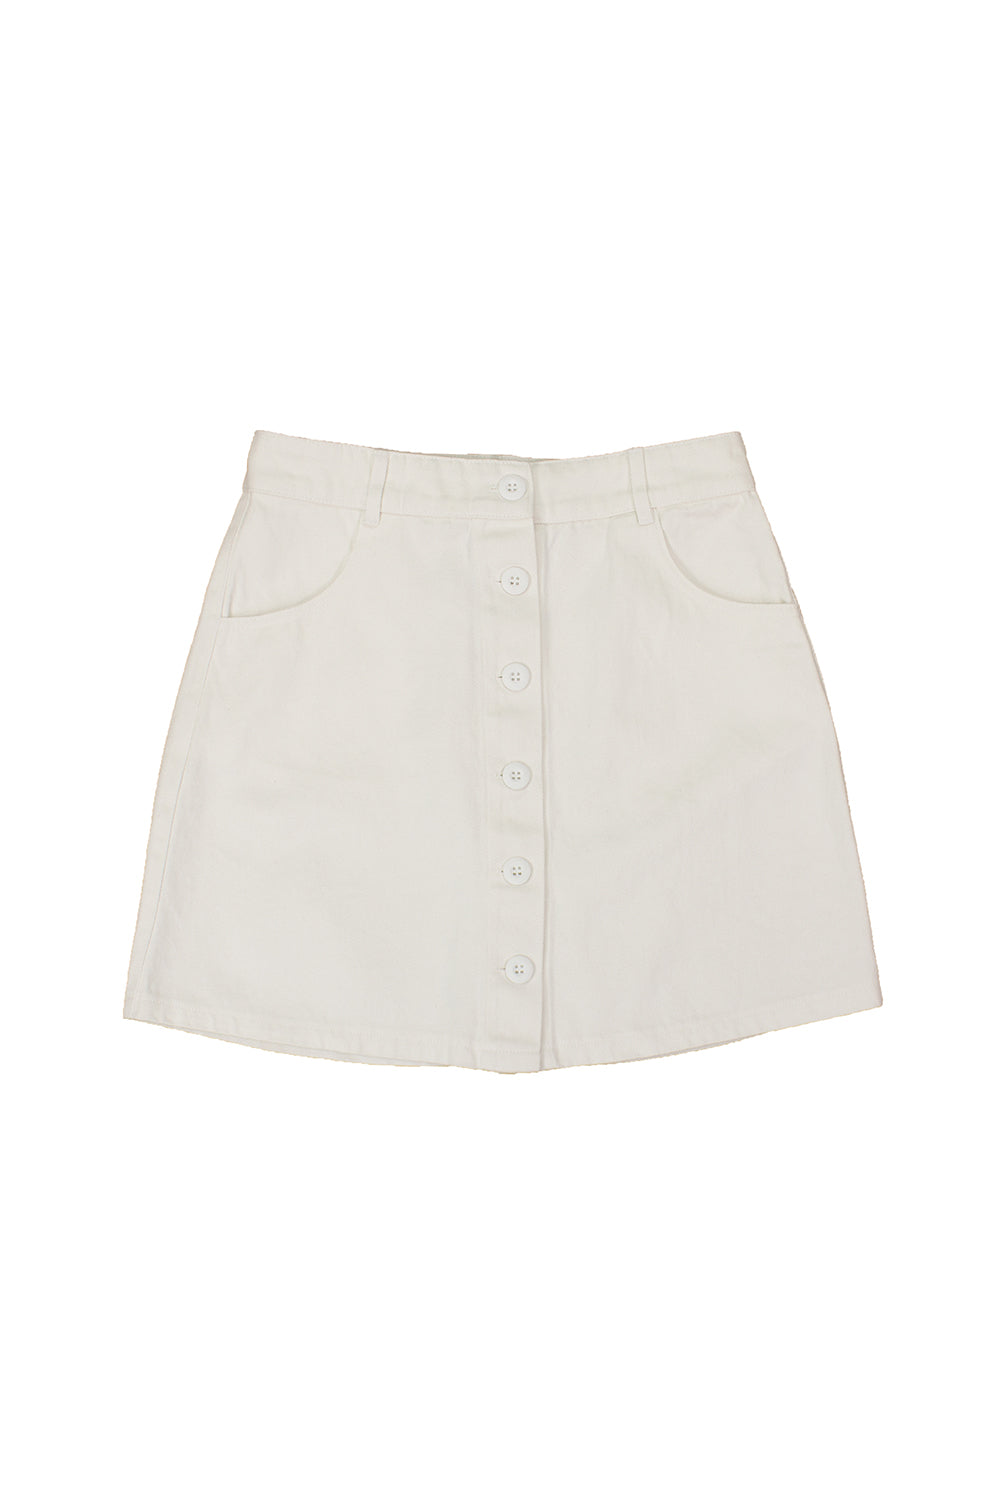 Vassar Skirt | Jungmaven Hemp Clothing & Accessories / Color: Washed White